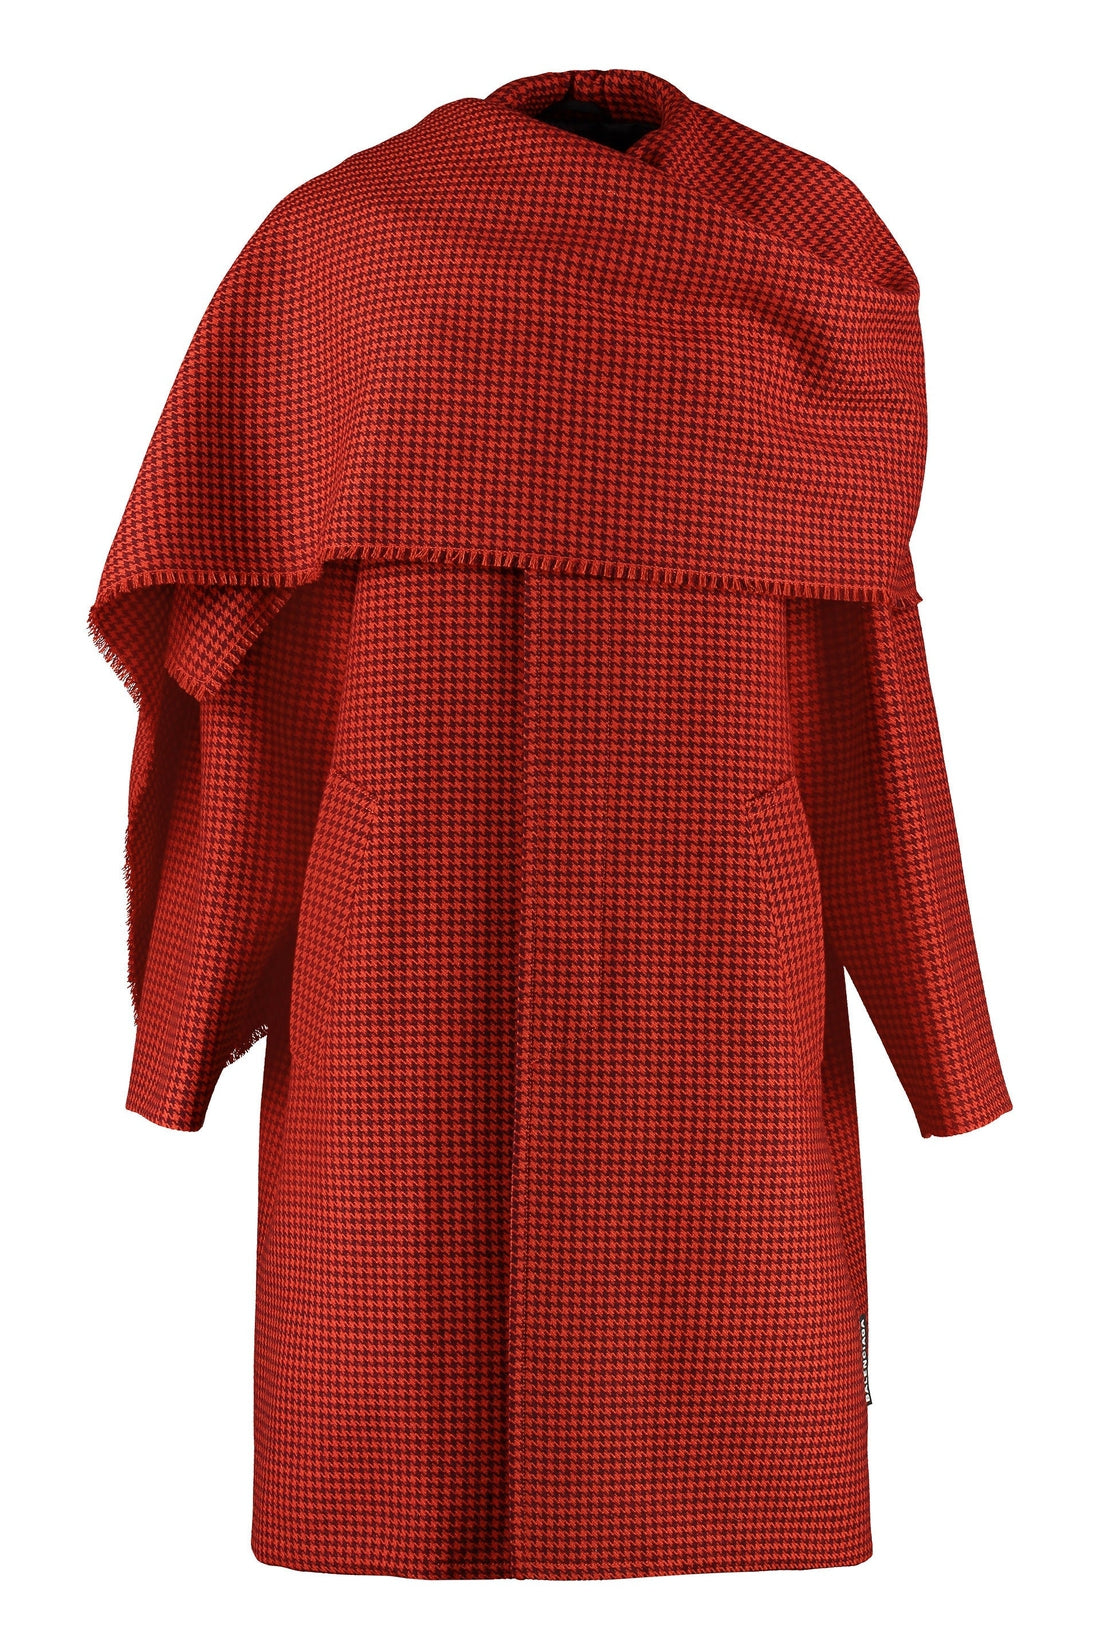 Balenciaga-OUTLET-SALE-Virgin wool long coat-ARCHIVIST